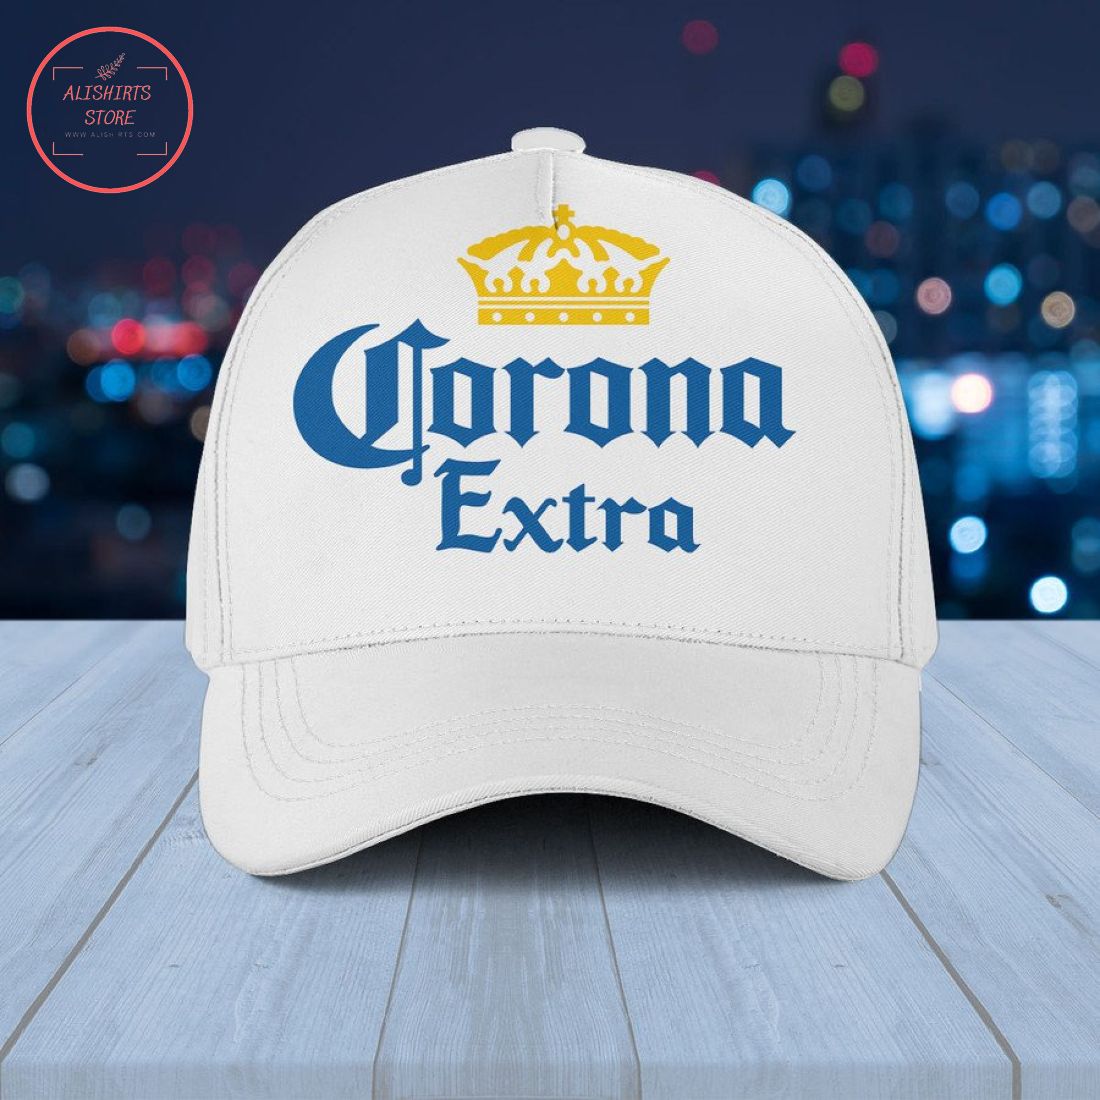 Corona Extra Beer Classic Hat Cap